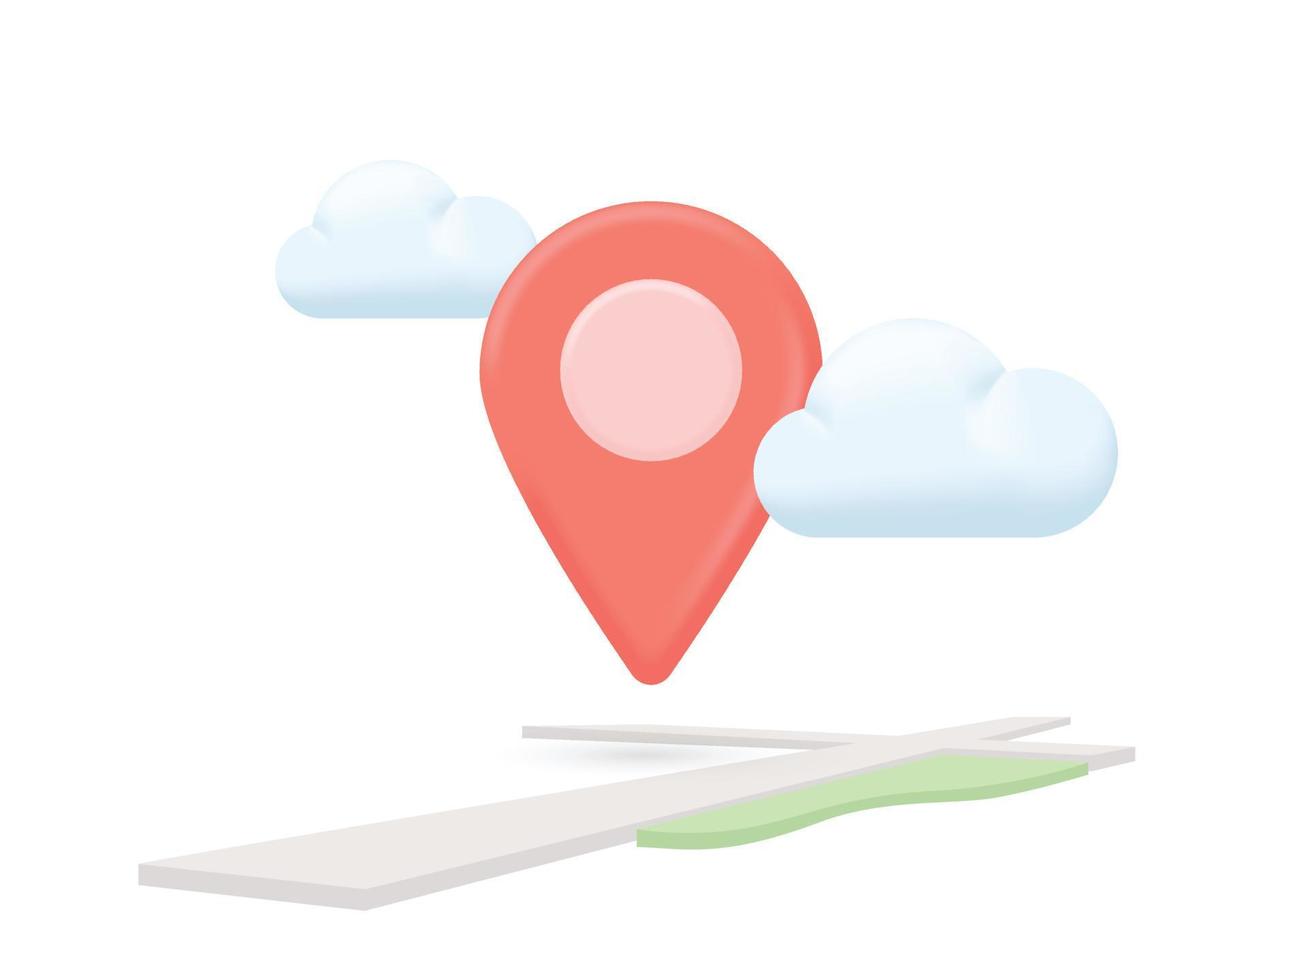 Marcador de punto de ubicación de mapa 3d de mapa o signo de icono de pin de navegación con nube vector